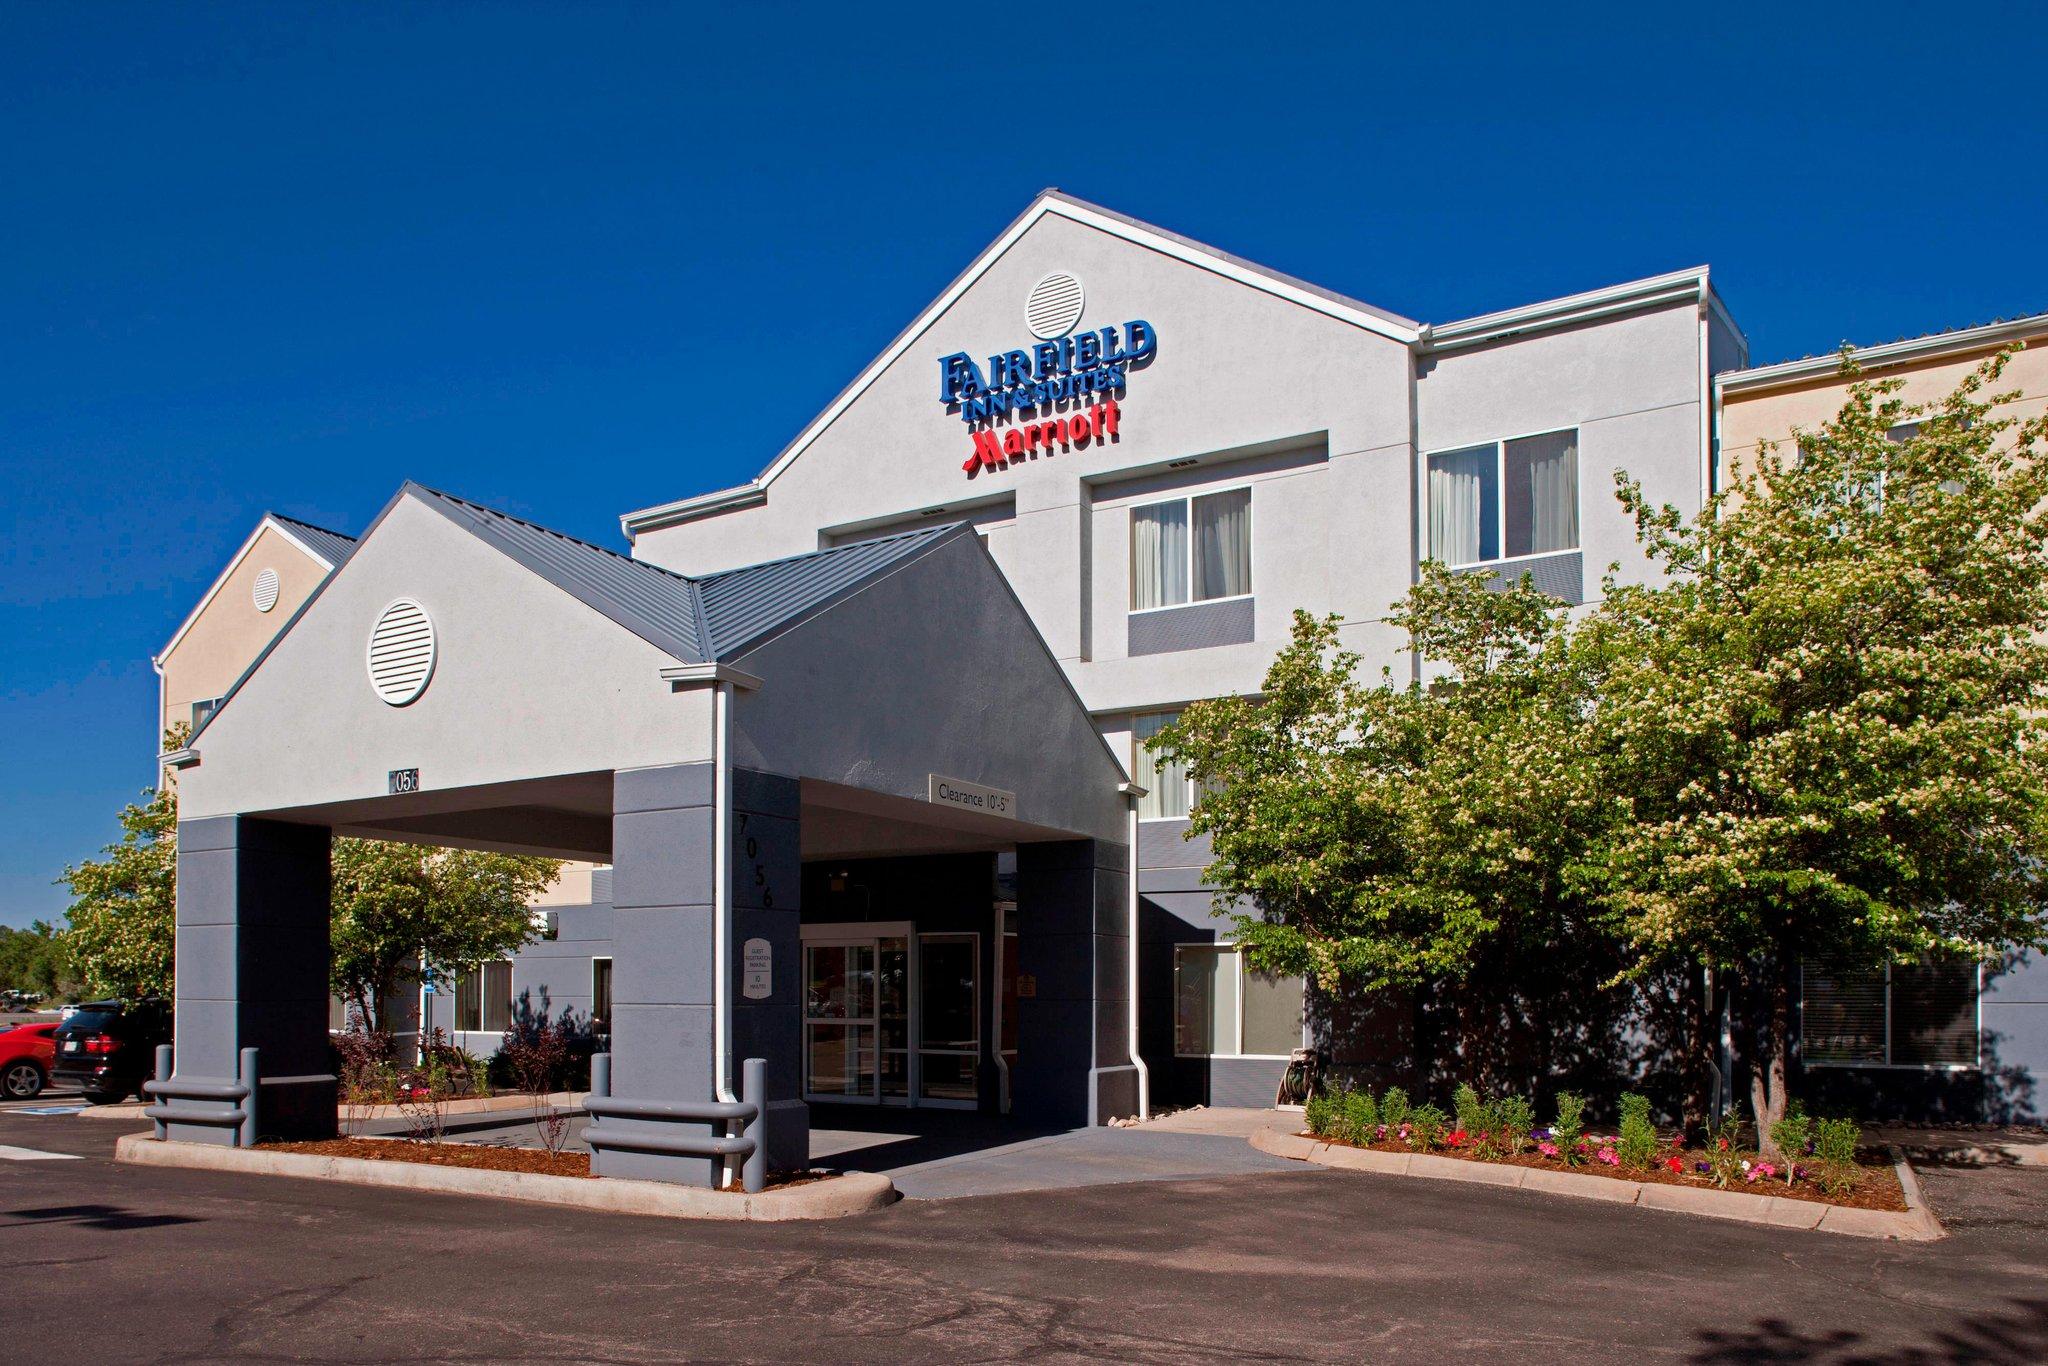 Fairfield Inn & Suites Denver Tech Center/South in Highlands Ranch, CO